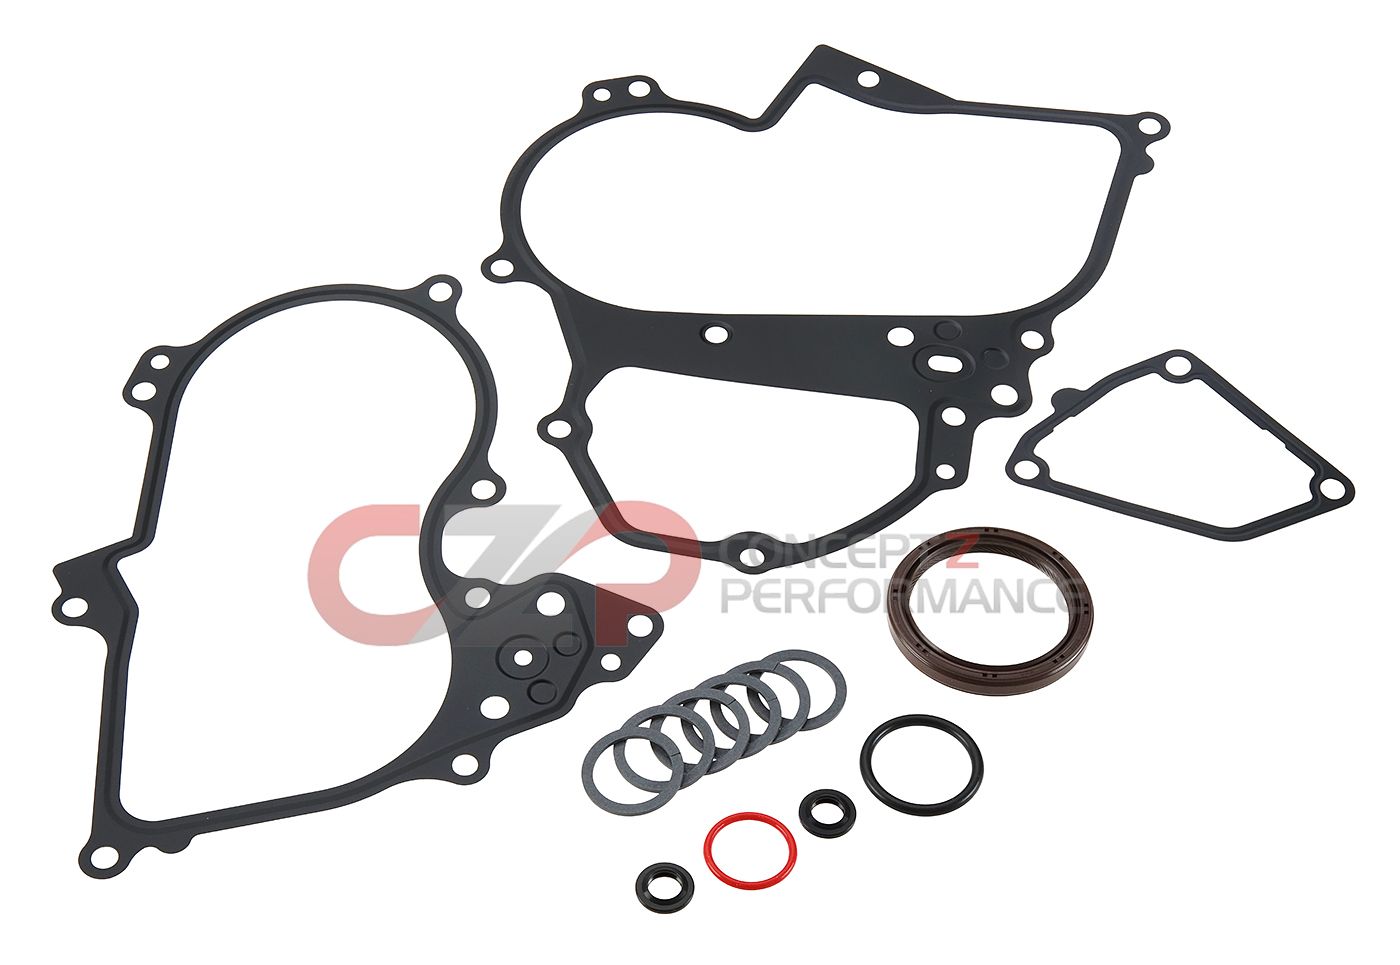 Nissan OEM Timing Chain Cover & O-Ring Seal Set / Gasket Kit, VQ35HR & VQ37VHR - Nissan 350Z 370Z / Infiniti G35 G37 Q50